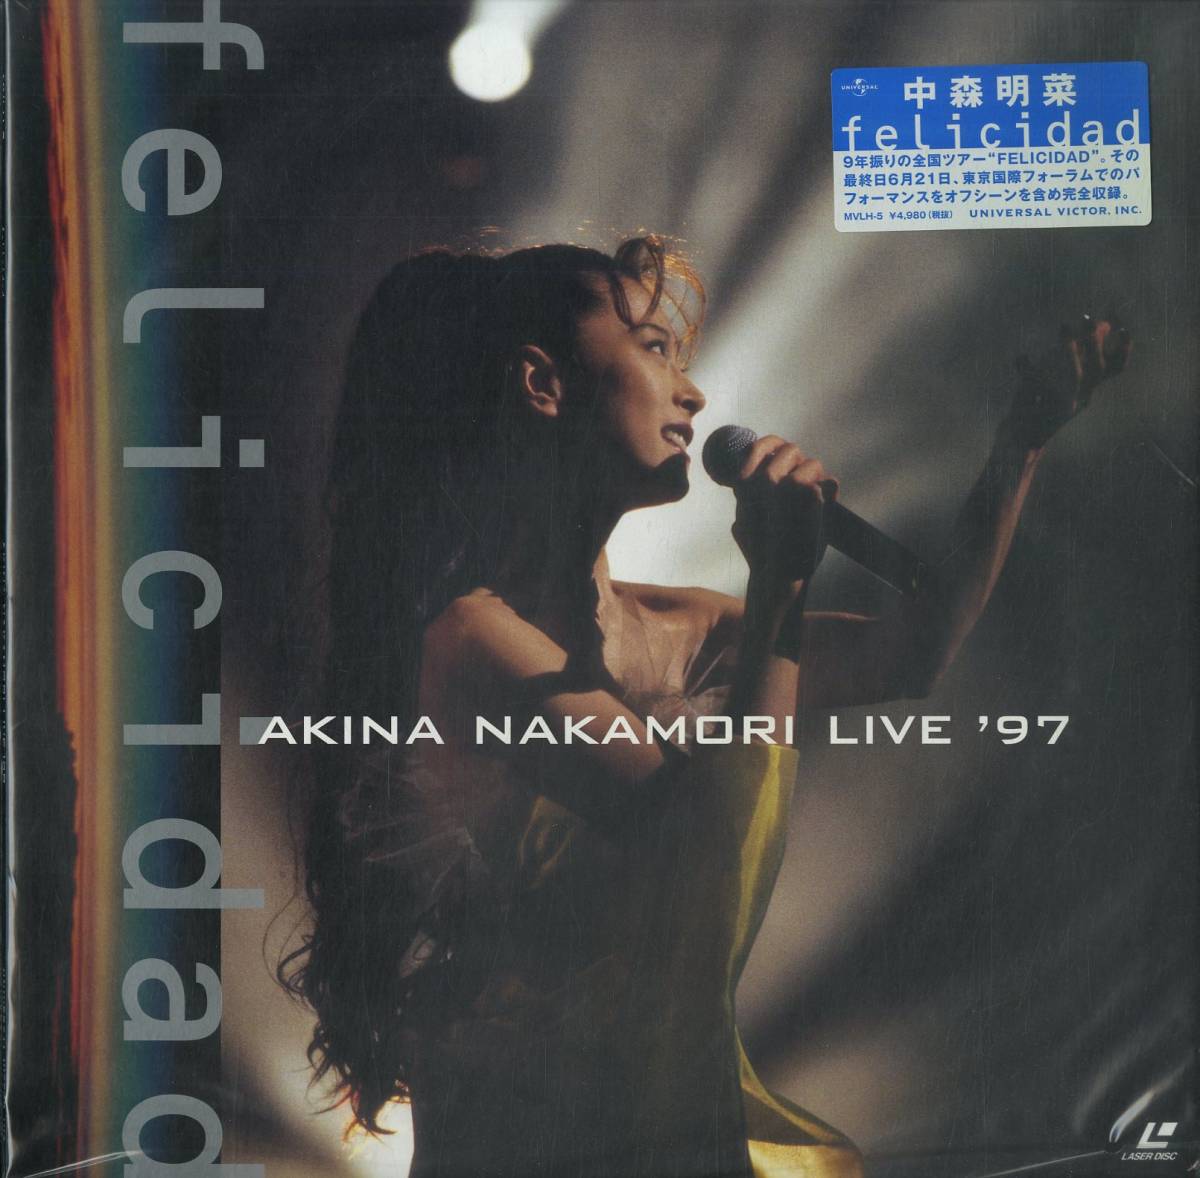 B00145010/【邦楽】LD/中森明菜「Felicidad / Akina Nakamori Live 97」_画像1